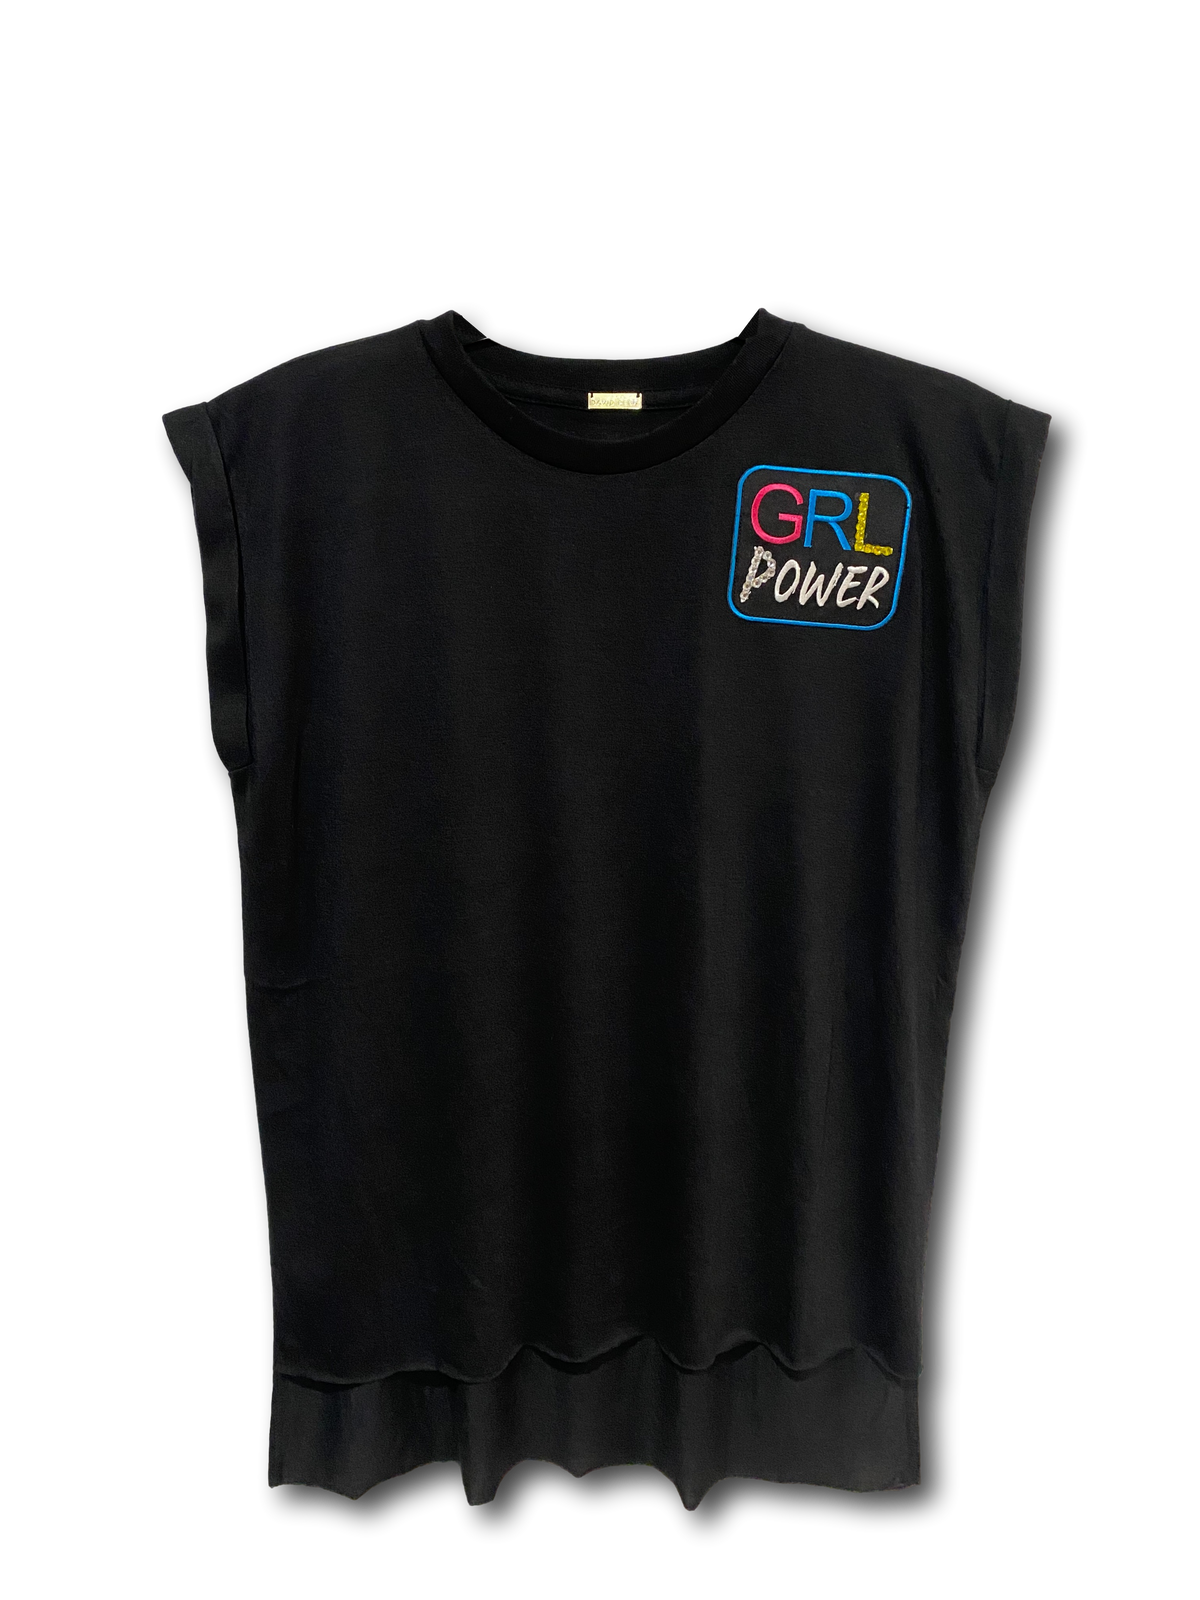 Girl Power Stevie T-Shirt Designed by David Peck for The Women&#39;s Fund Houston.